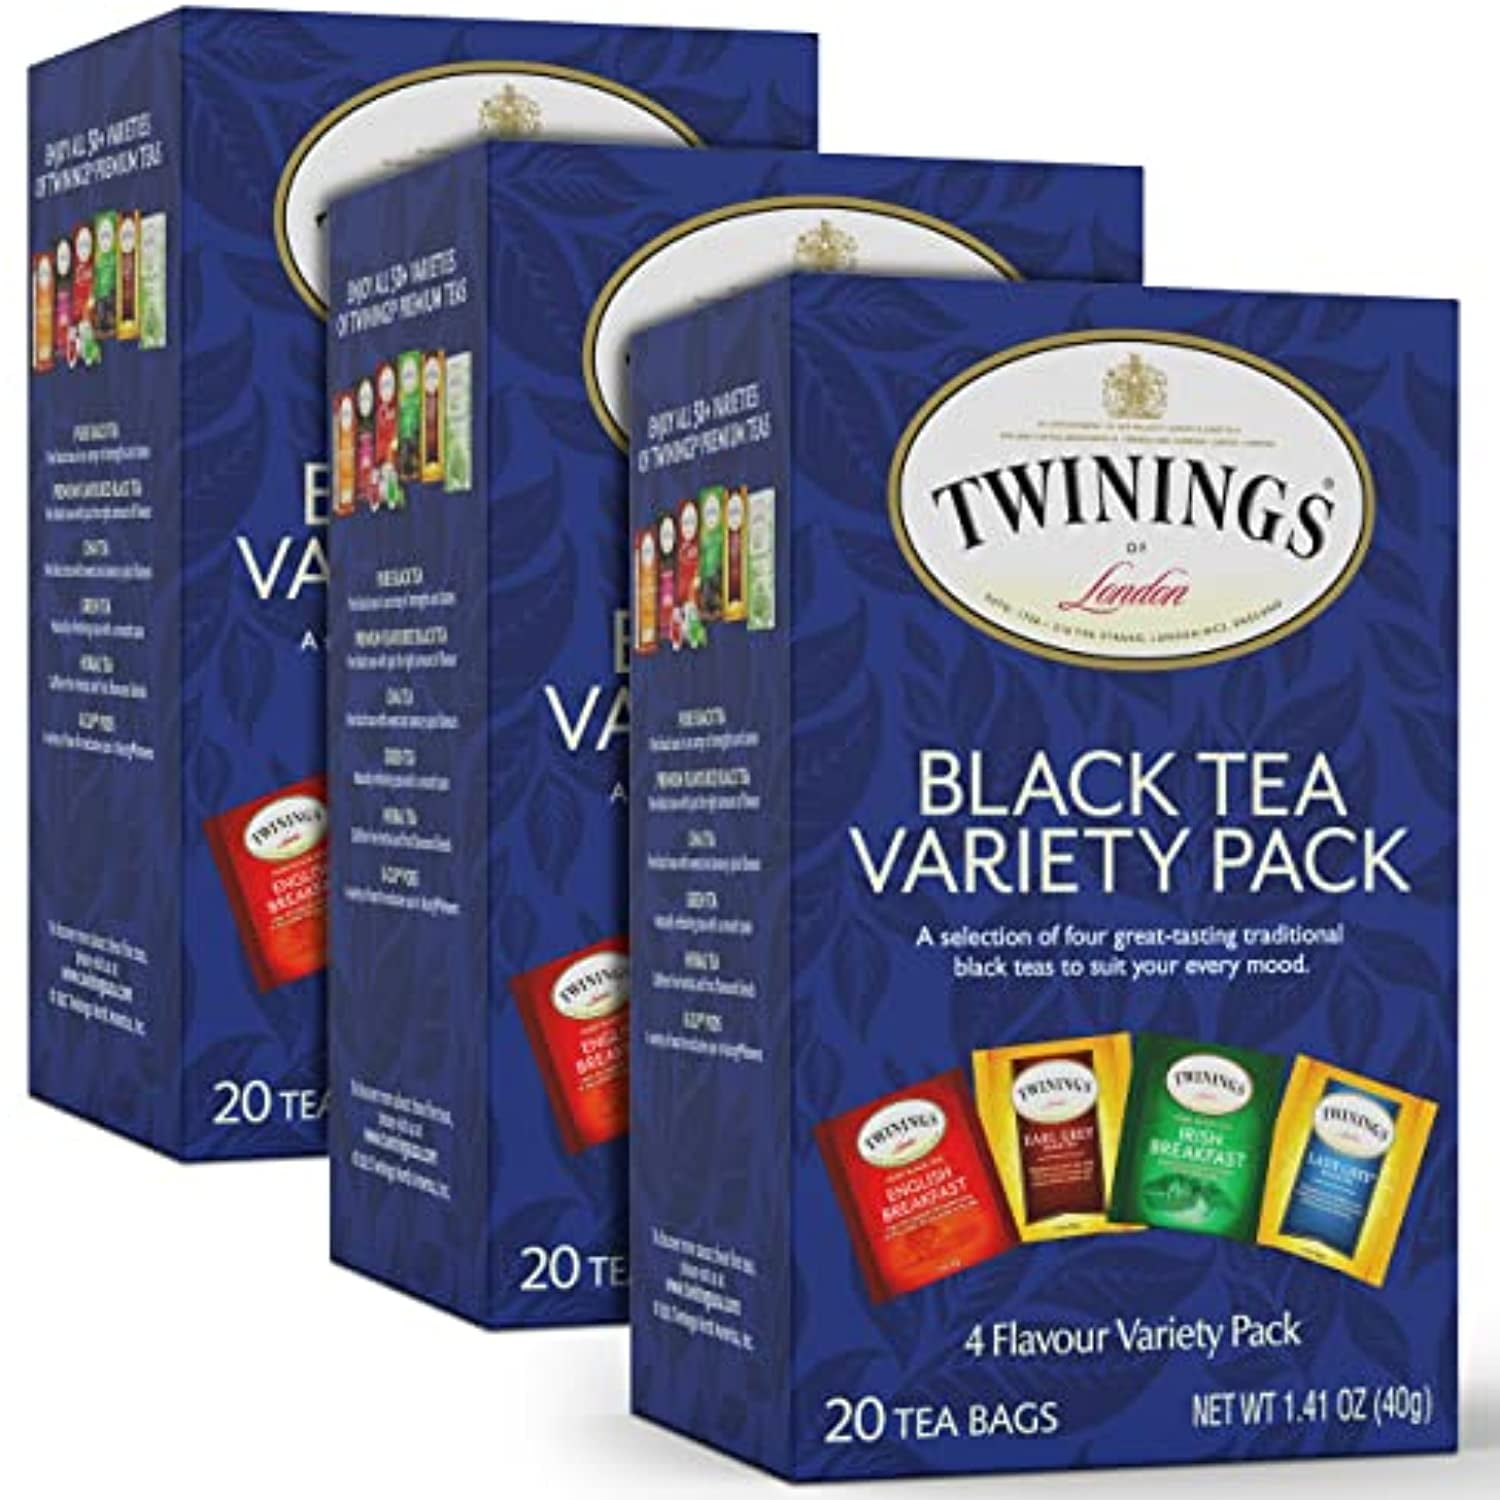 Twinings of London Classics English Breakfast Black Tea Bags - 20 ct box